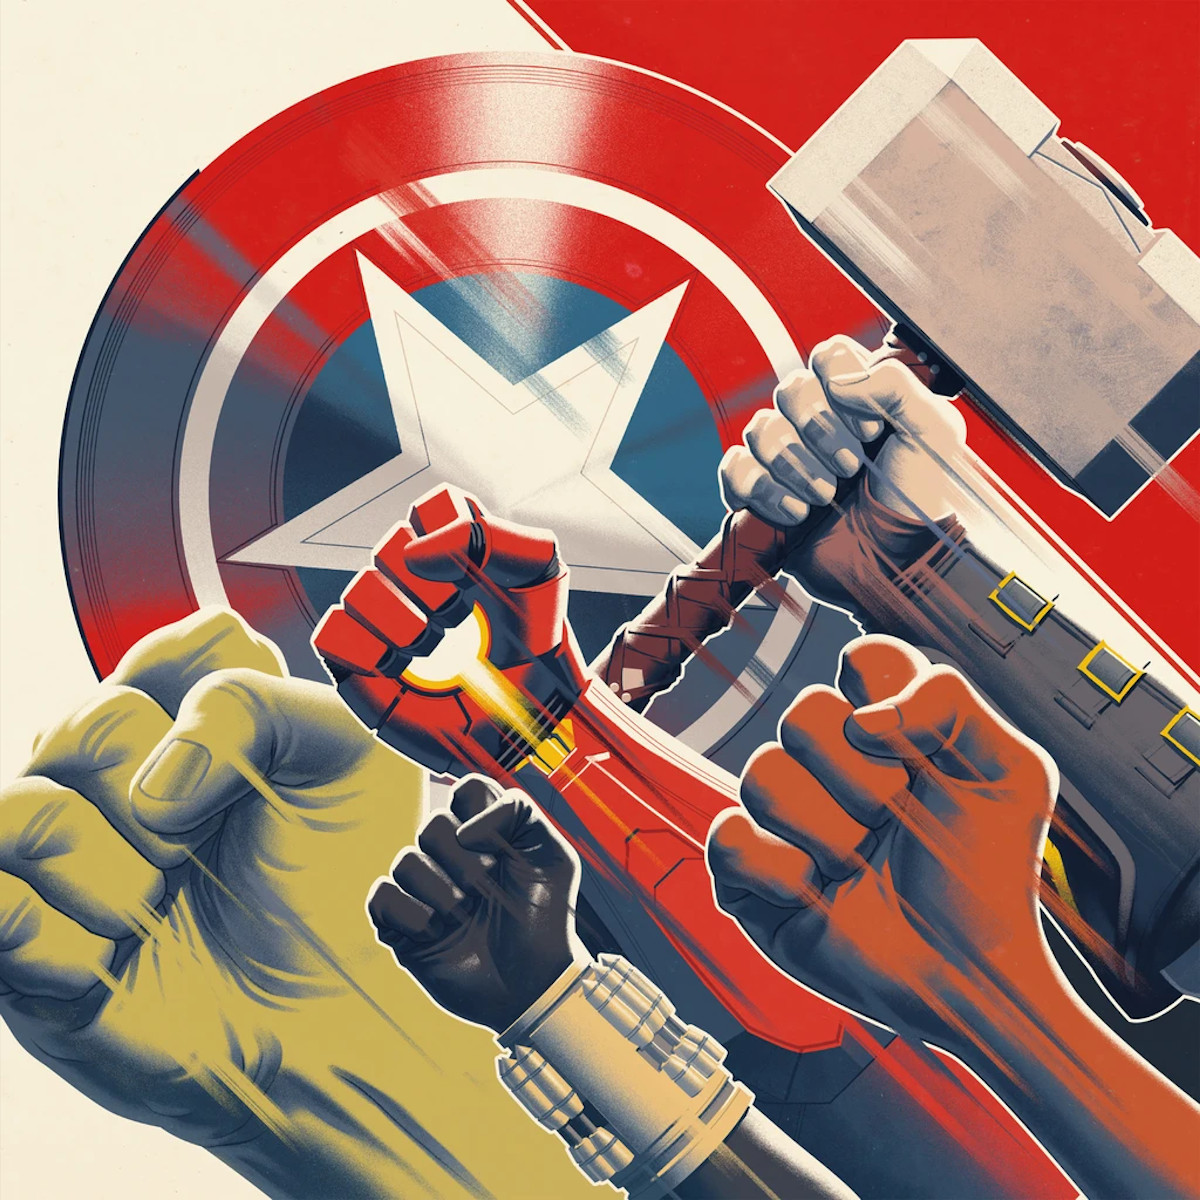 Marvel's Avengers Soundtrack Cover by Phantom City Creative